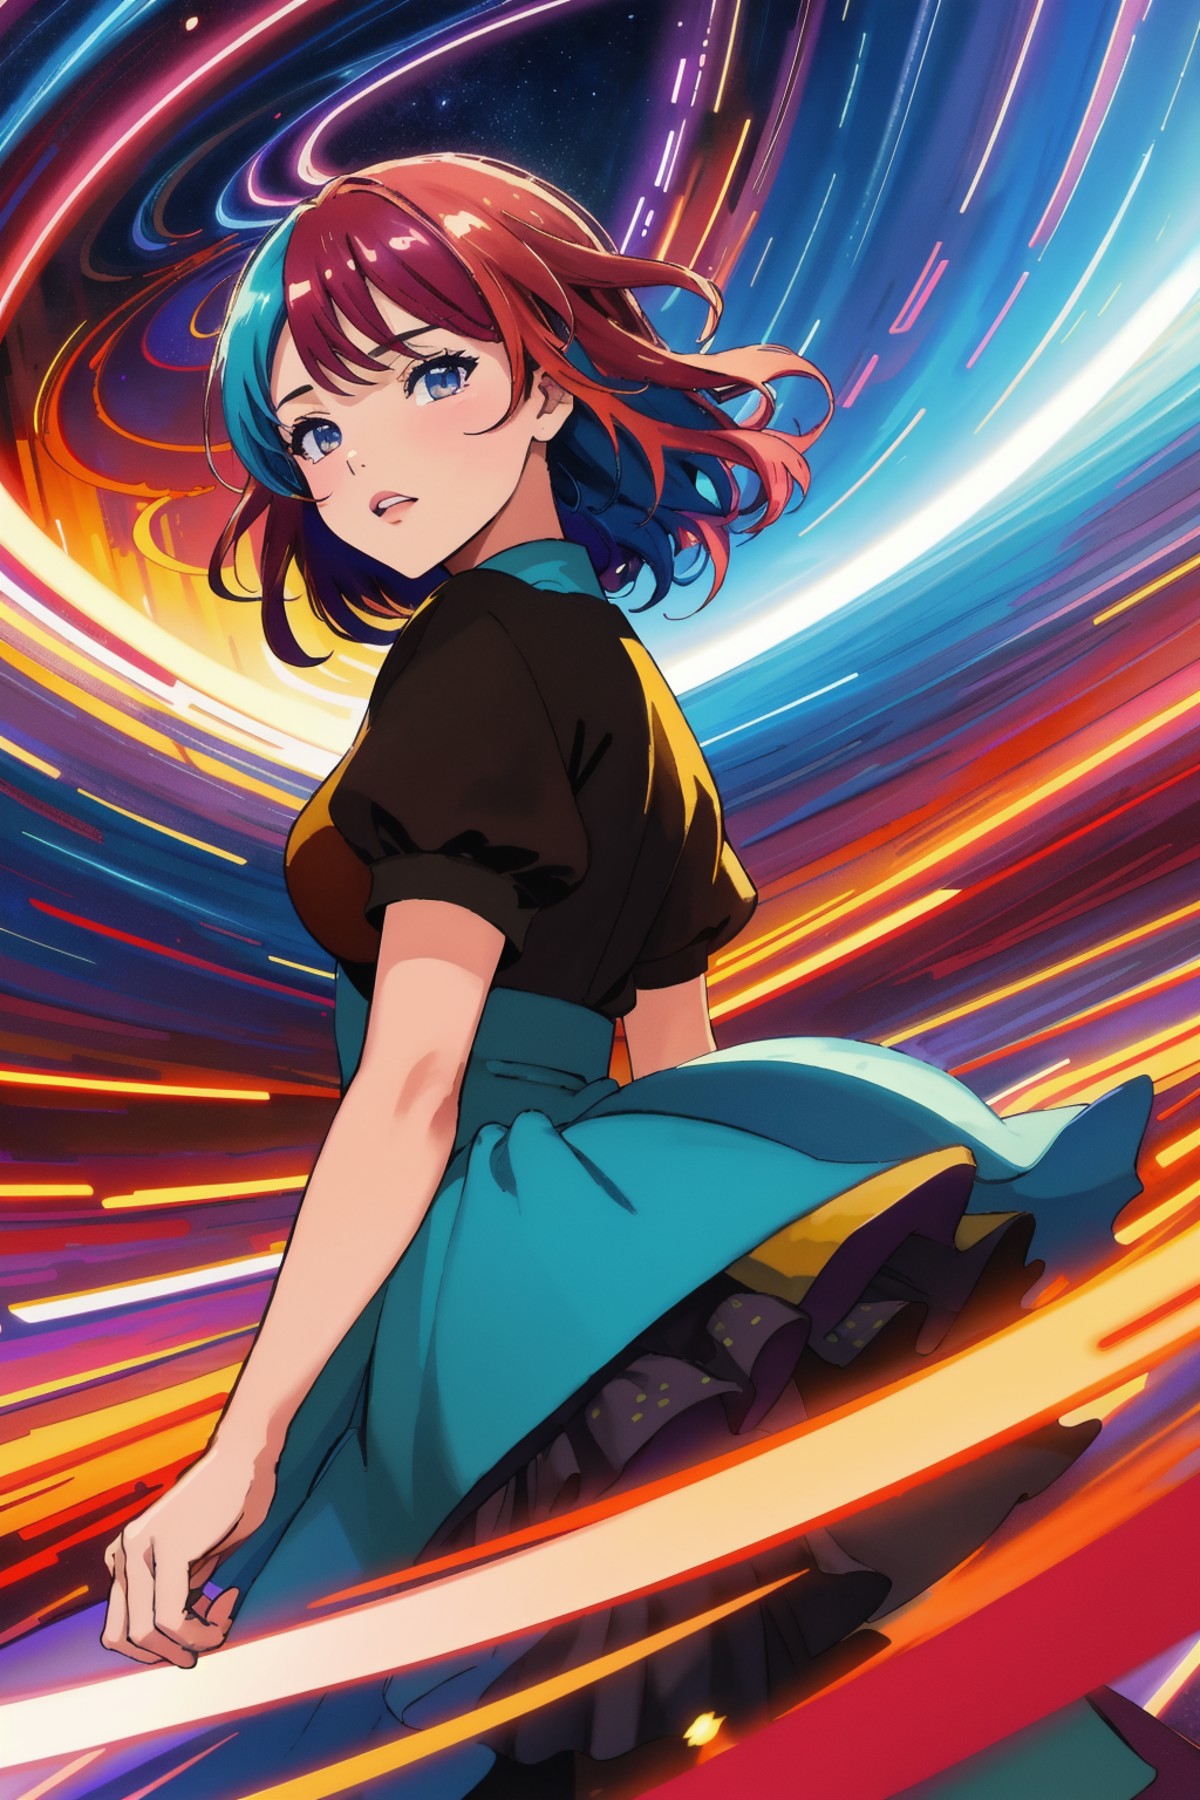 cinematic still anime artwork Wide angle digital illustration, (Vibrant abstract swirls in deep hues:1.3), Symmetrical com...